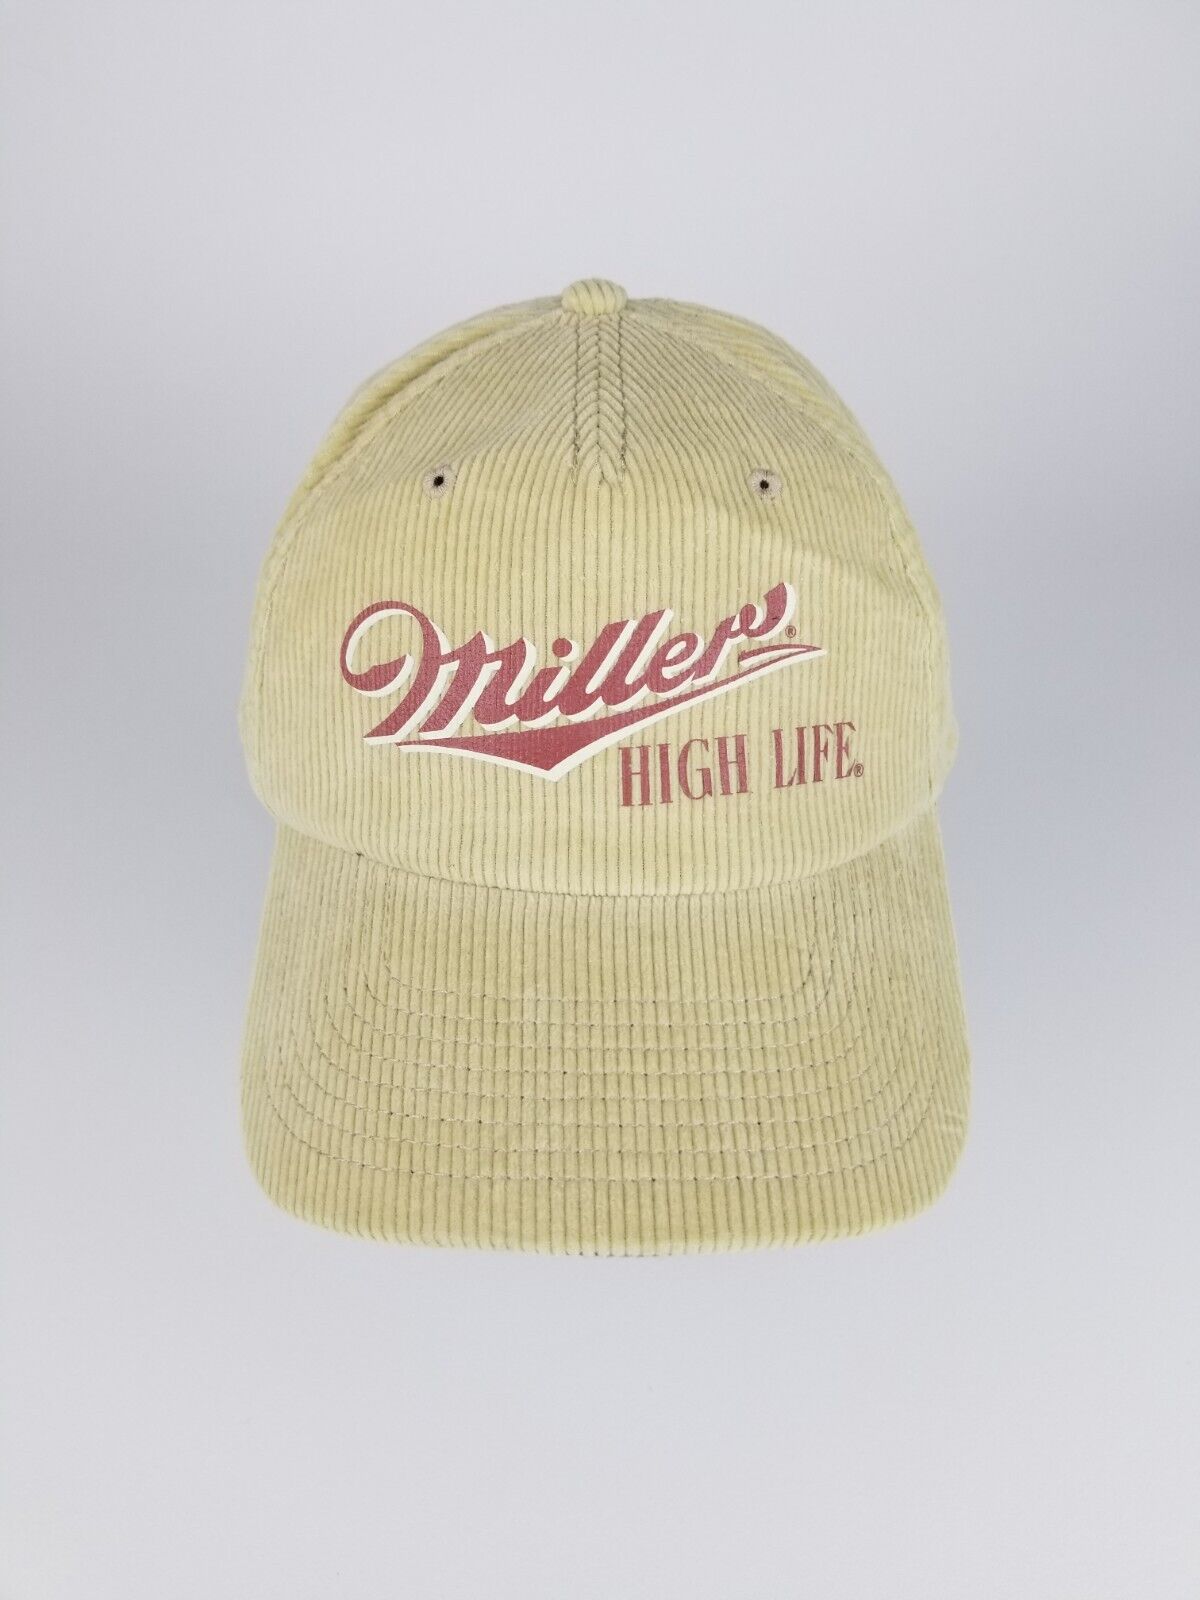 miller high life corduroy hat Retro Vintage 